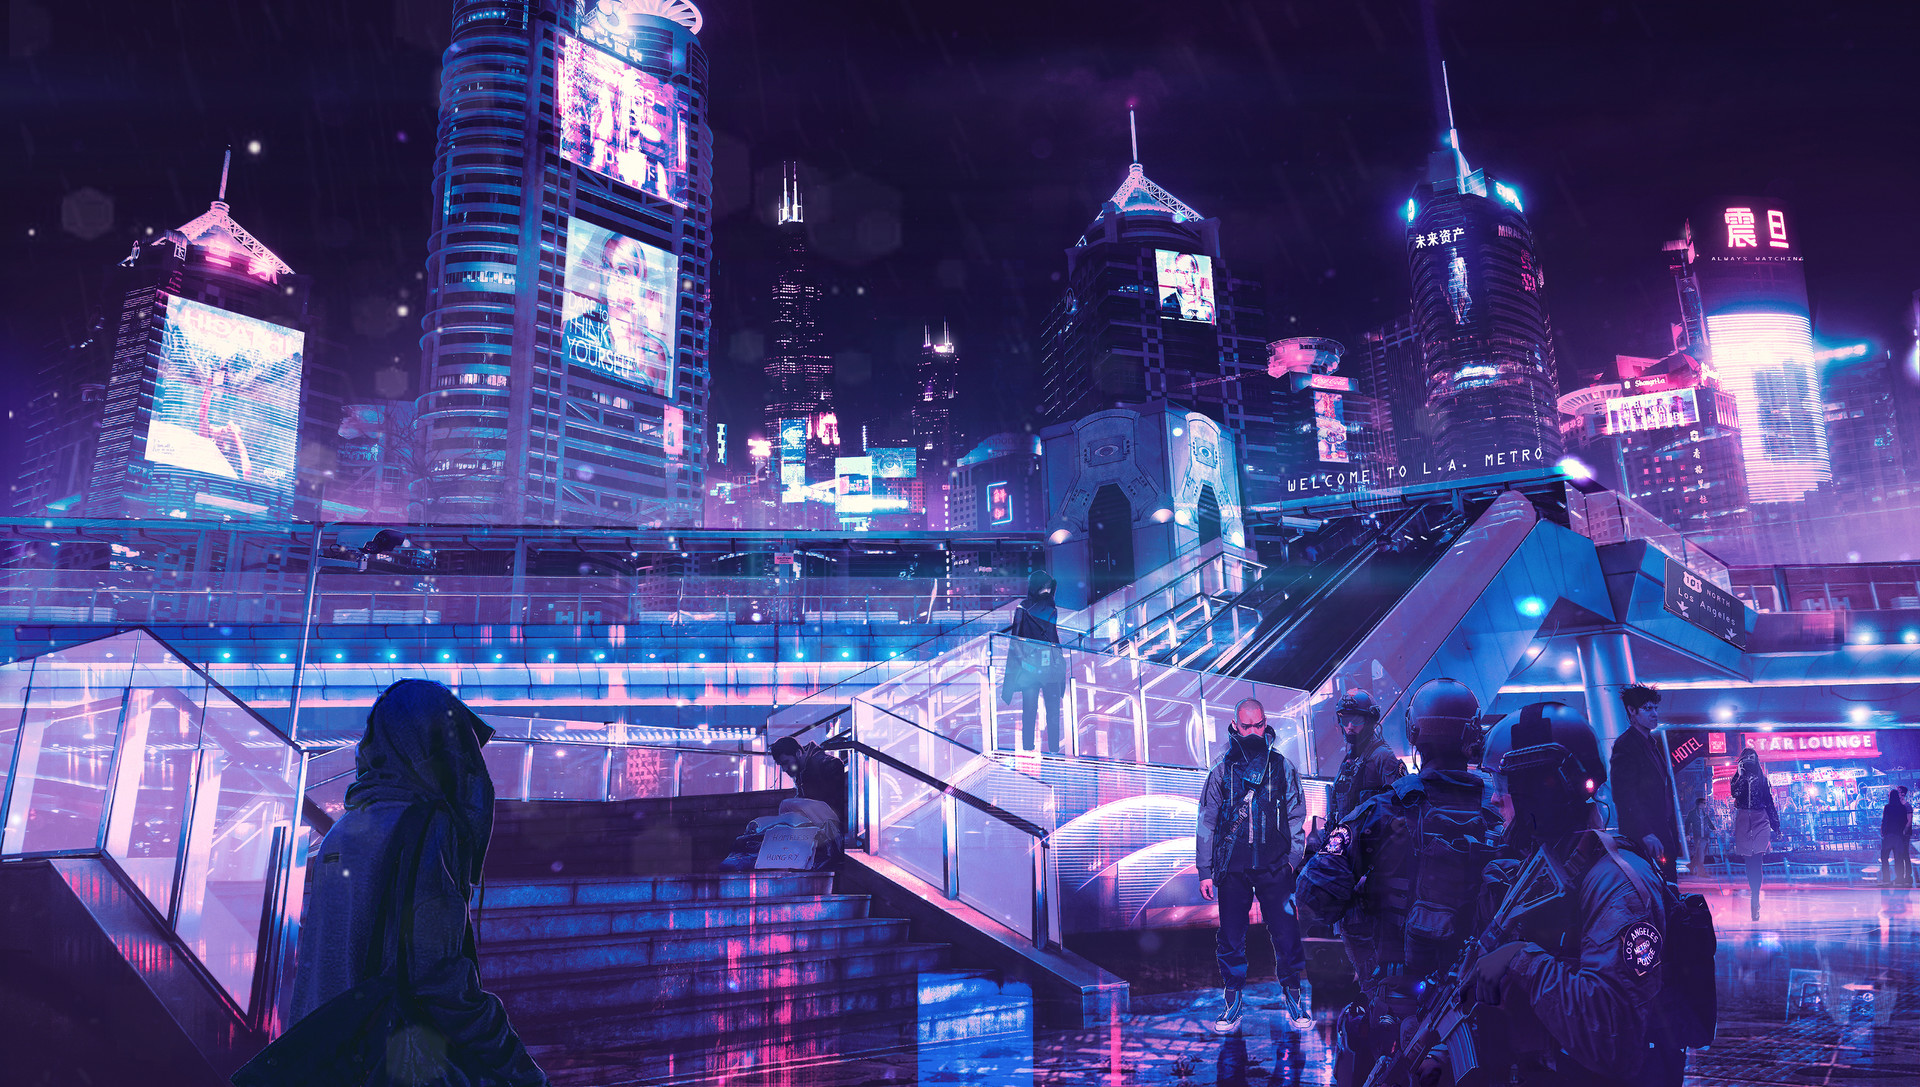 Download wallpaper 1440x900 cyberpunk, city, buildings, art